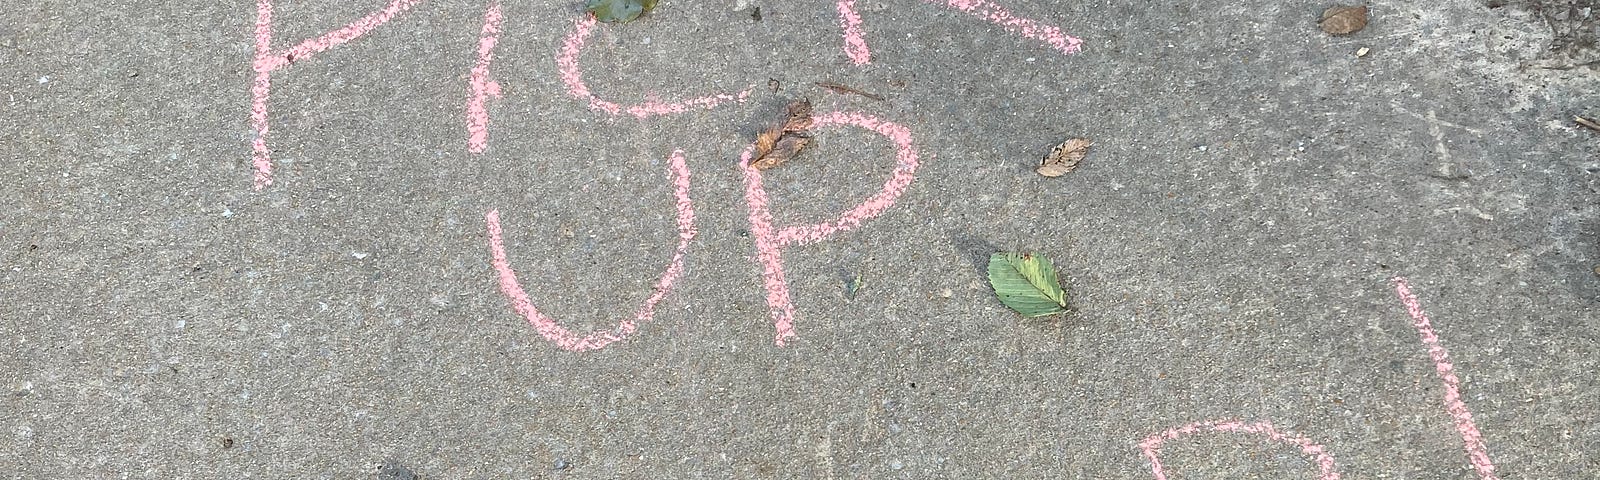 The message “Pick Up Poop!” printed in pink chalk on a sidewalk.